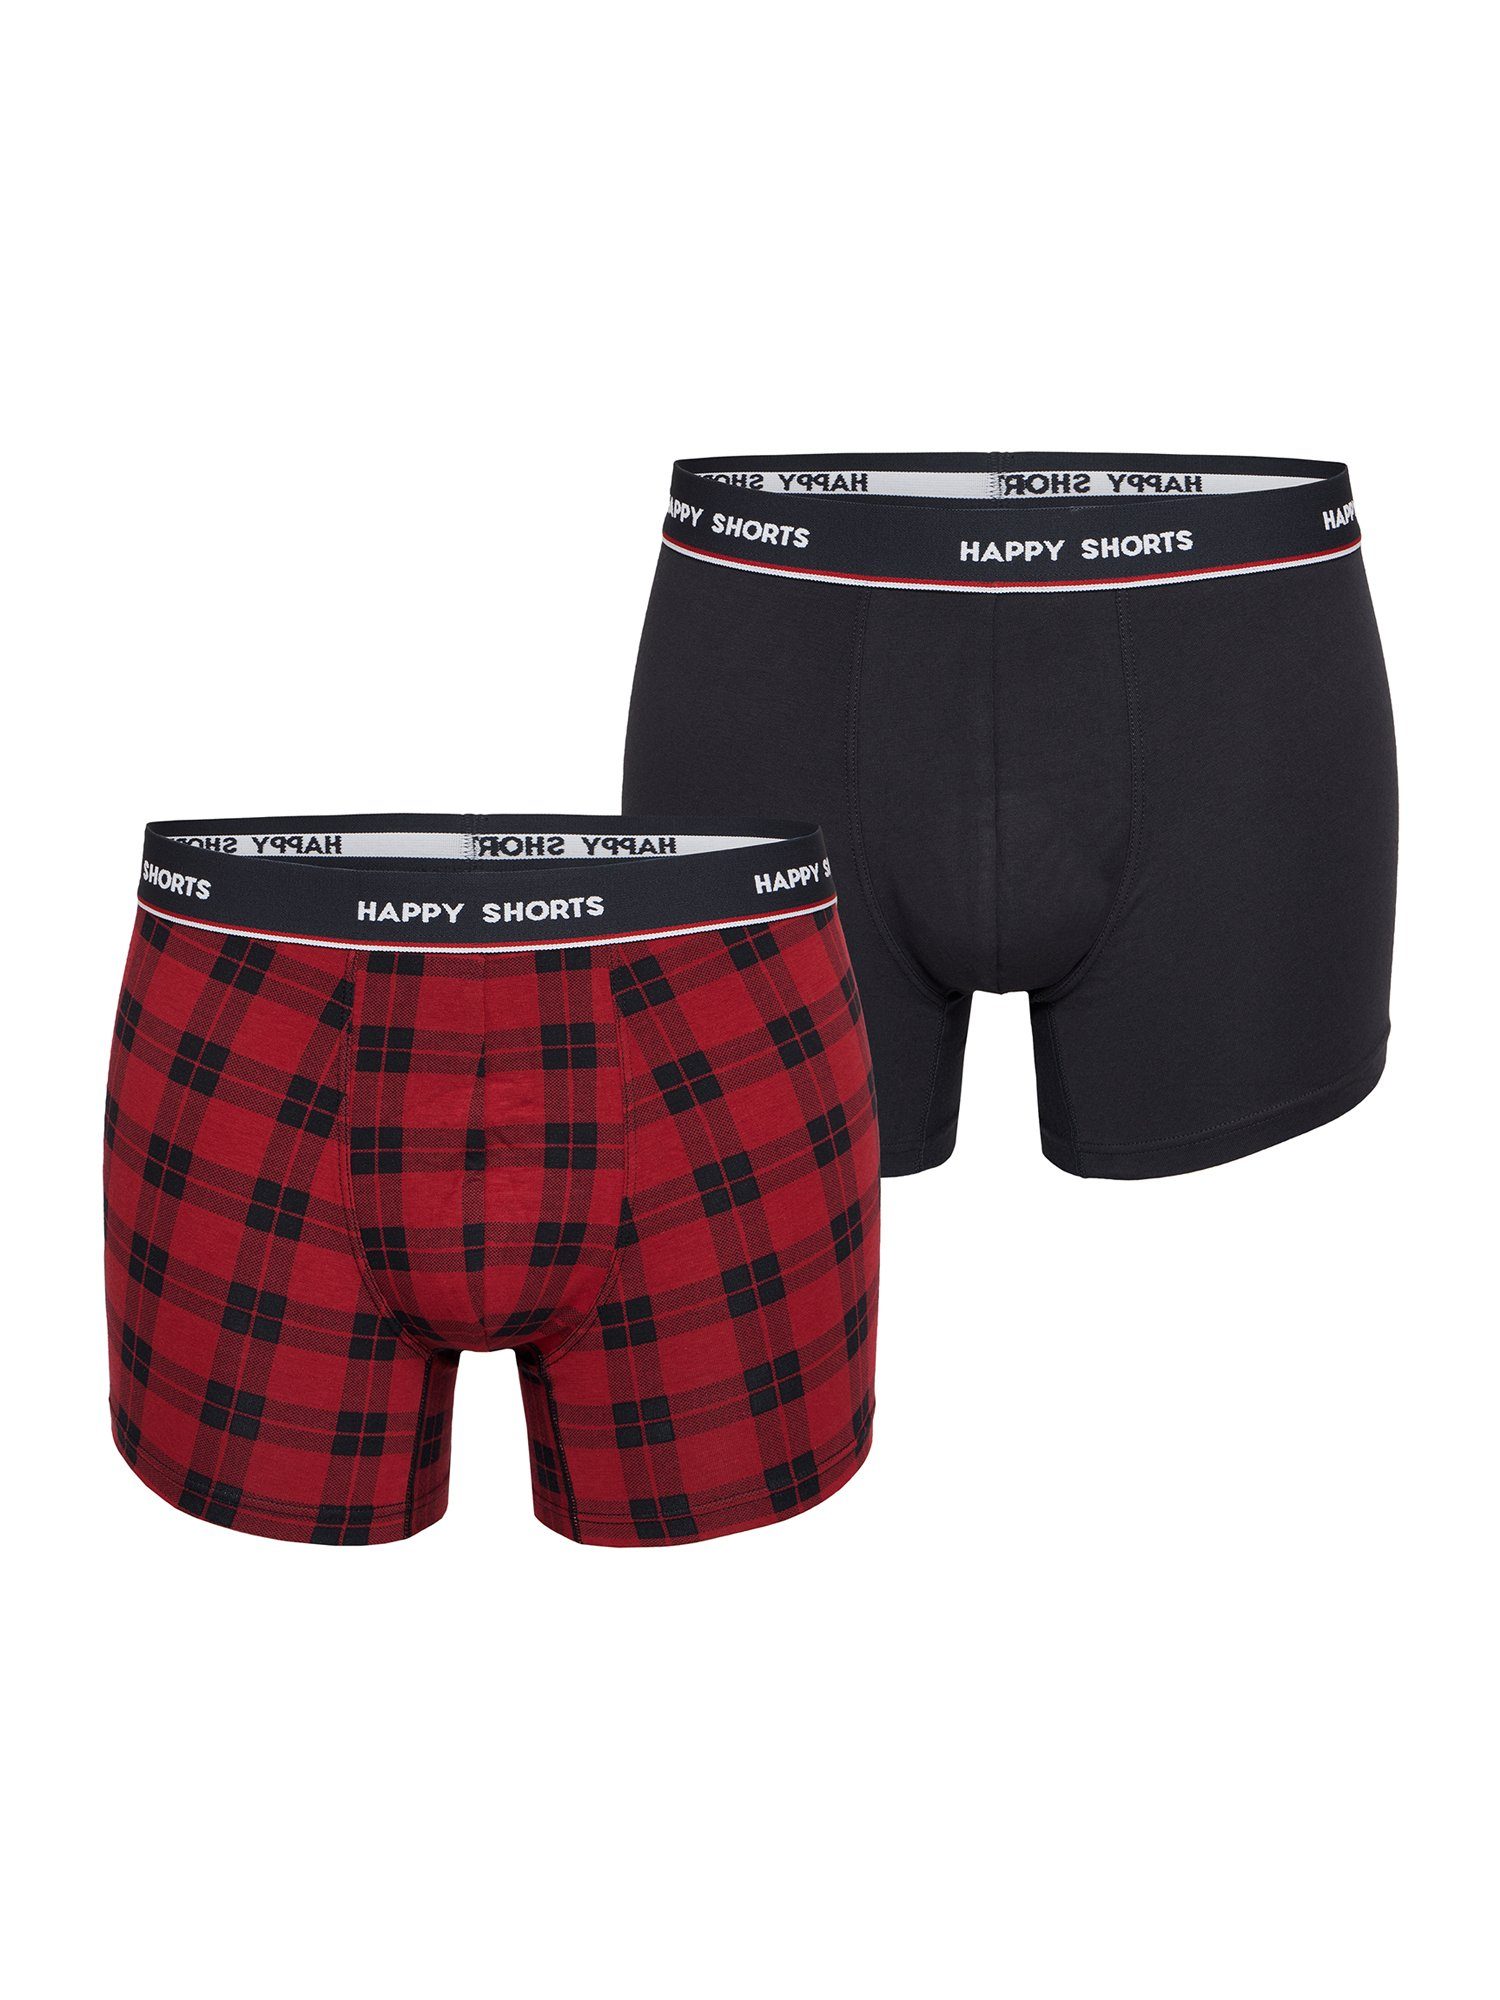 Retro Retro-shorts Pants HAPPY SHORTS (2-St) Trunks Check unterhose Retro-Boxer